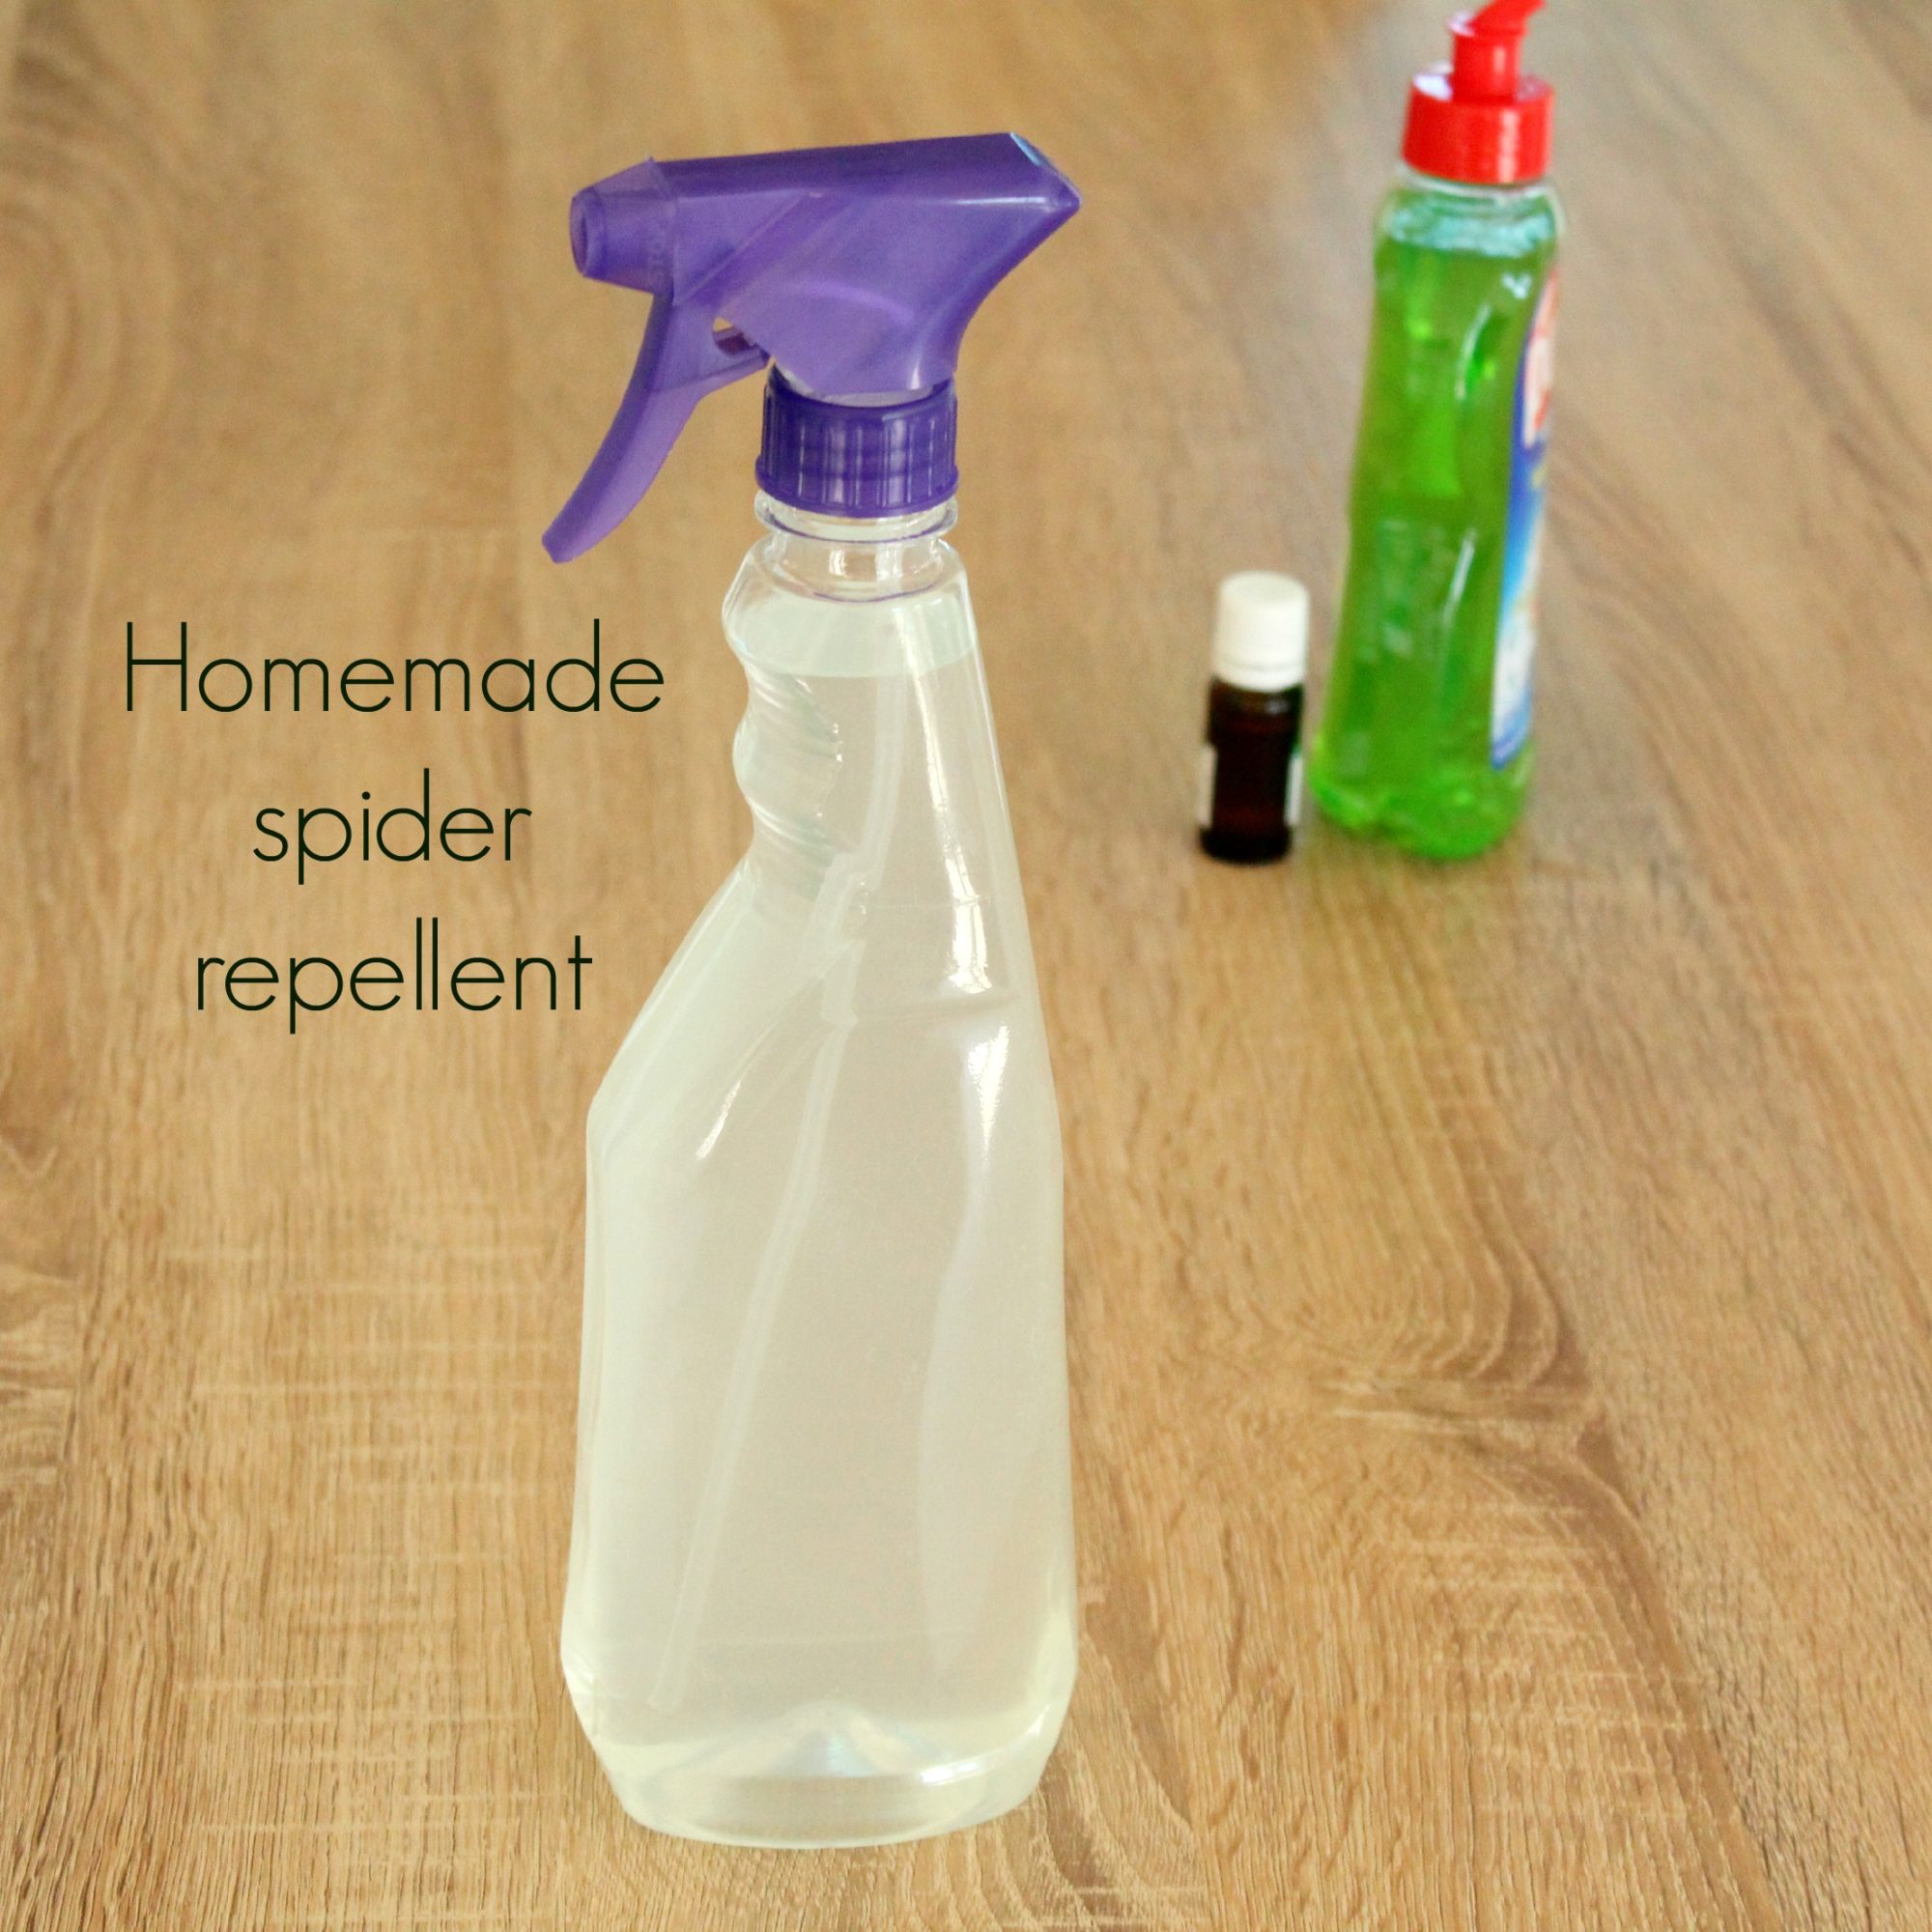 Homemade spider repellent